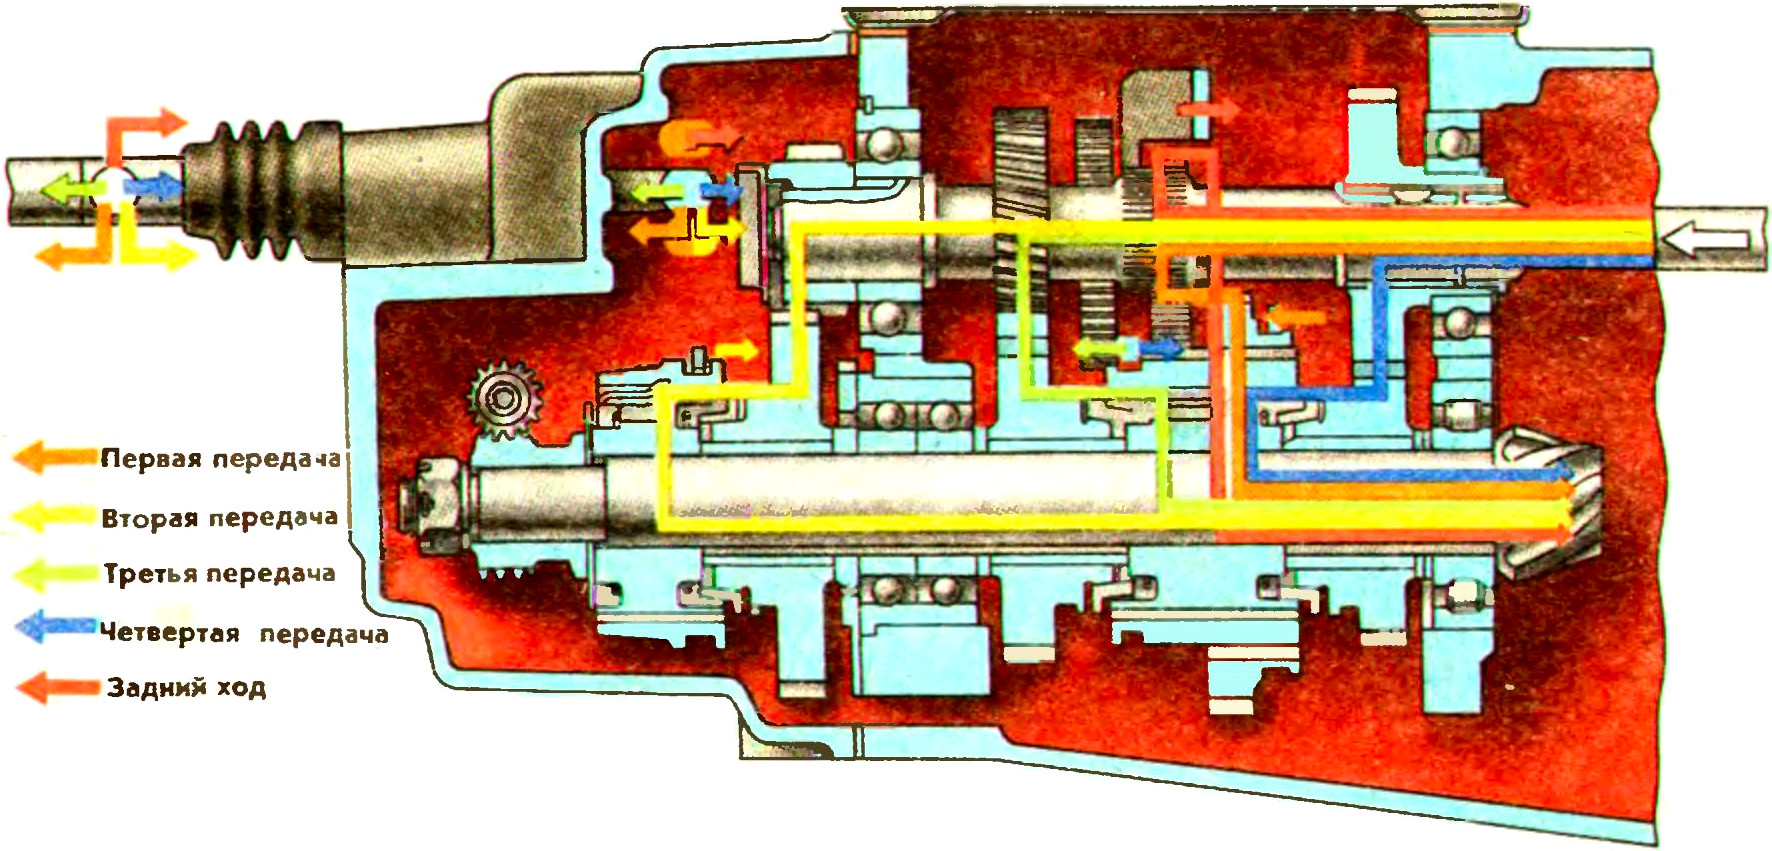 Схема работы передач в коробке передач силового агрегата МеМЗ-966Г автомобиля ЗАЗ-968М-005 Запорожец